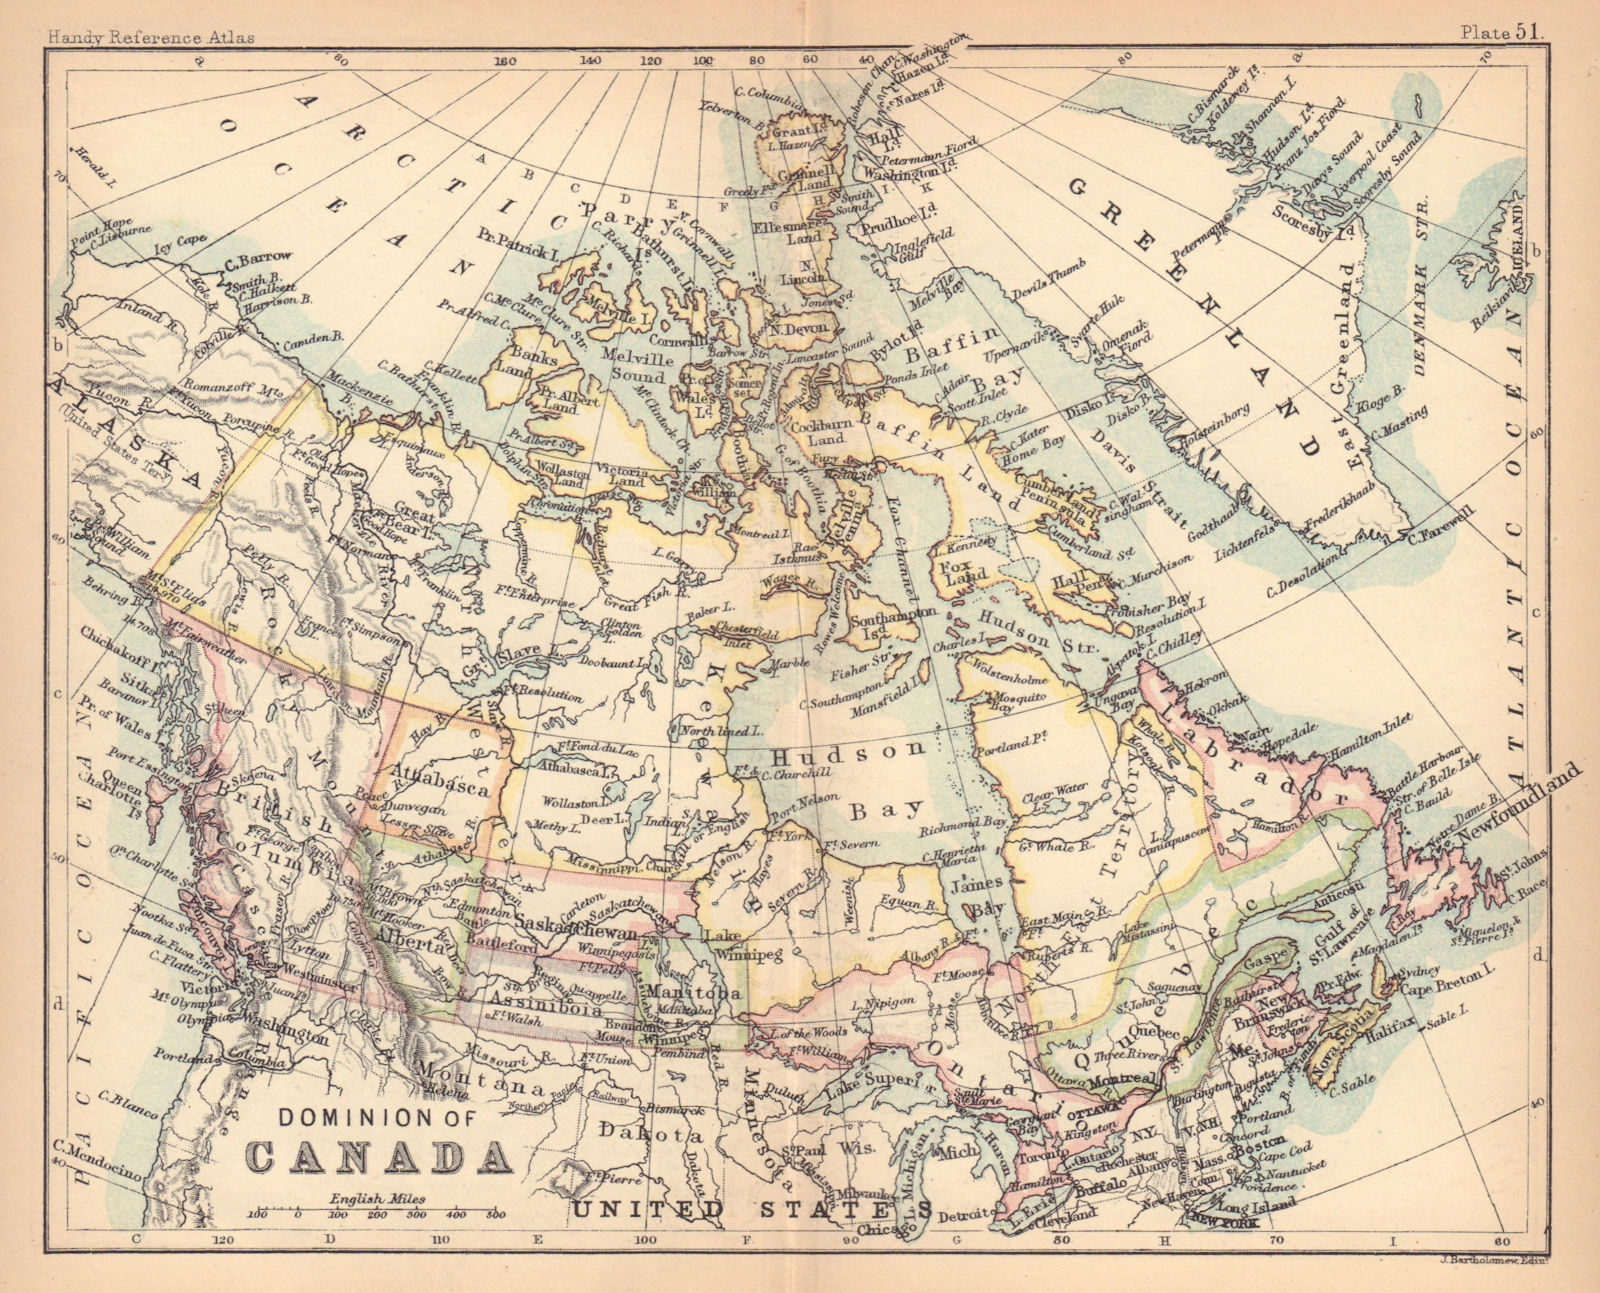 Associate Product Dominion of Canada. Manitoba postage stamp. Athabasca. BARTHOLOMEW 1888 map